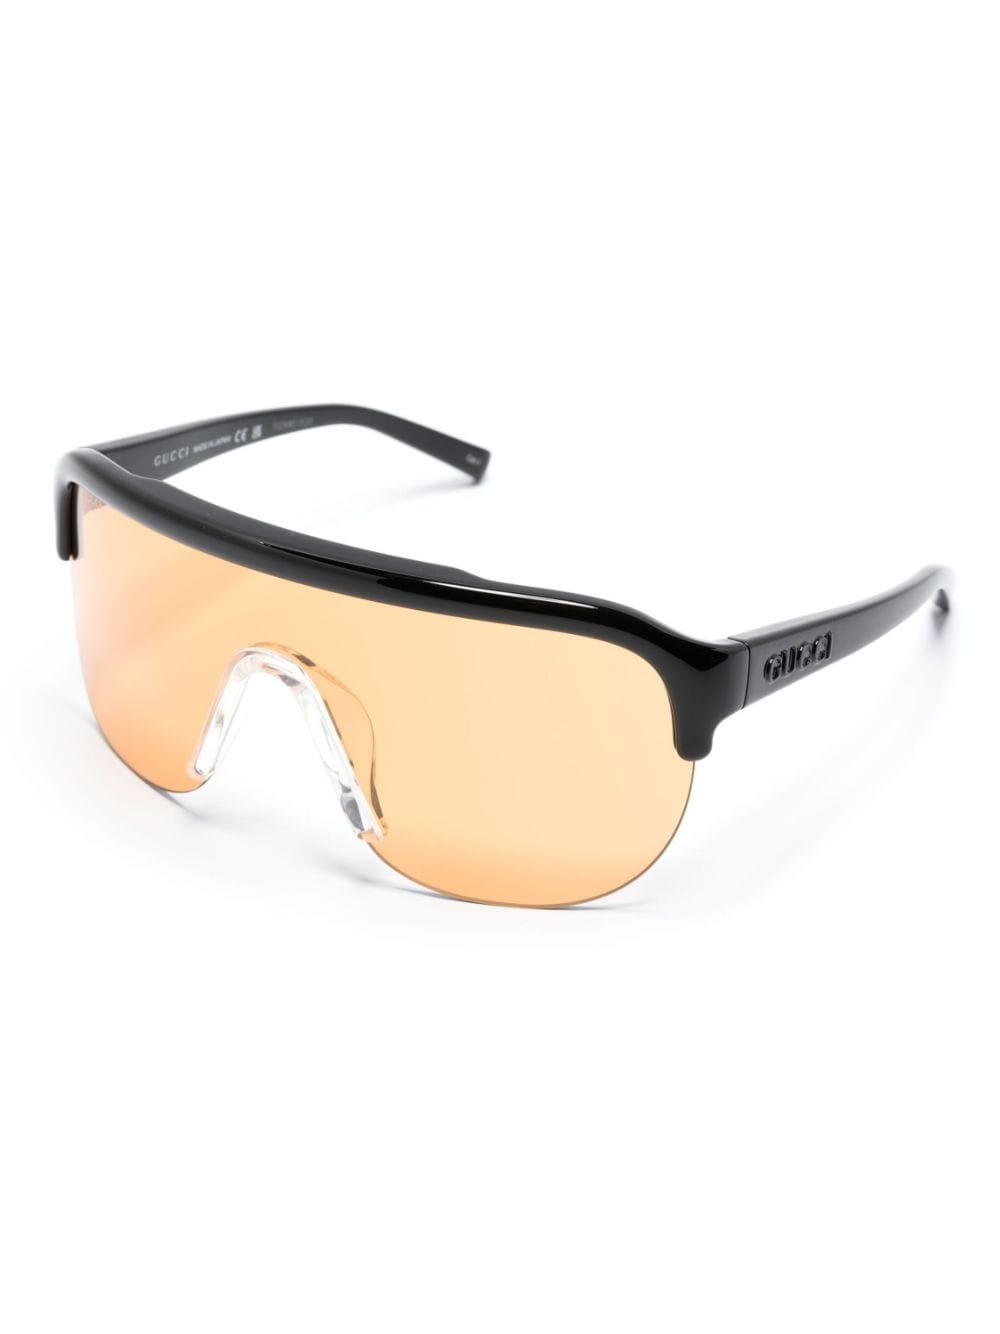 lens-decal shield-frame sunglasses - 2